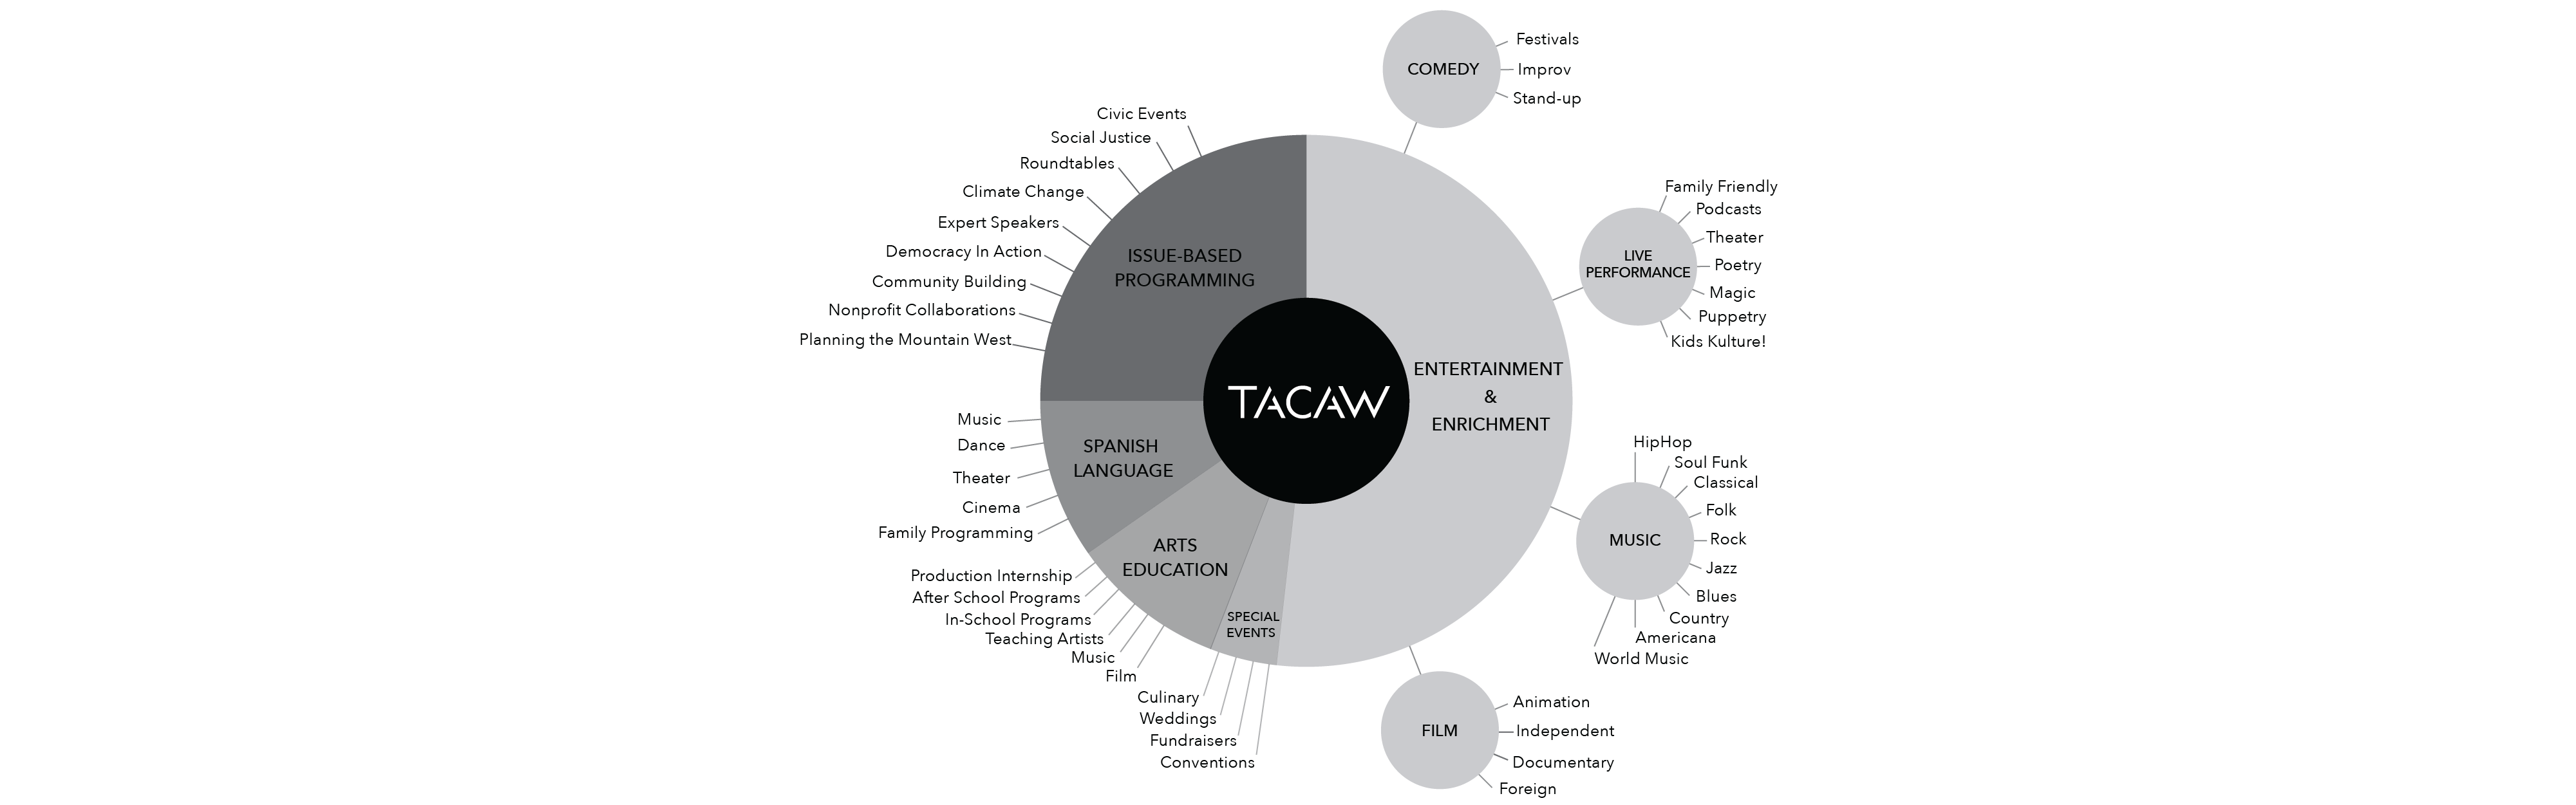 TACAW-Programming-Mix